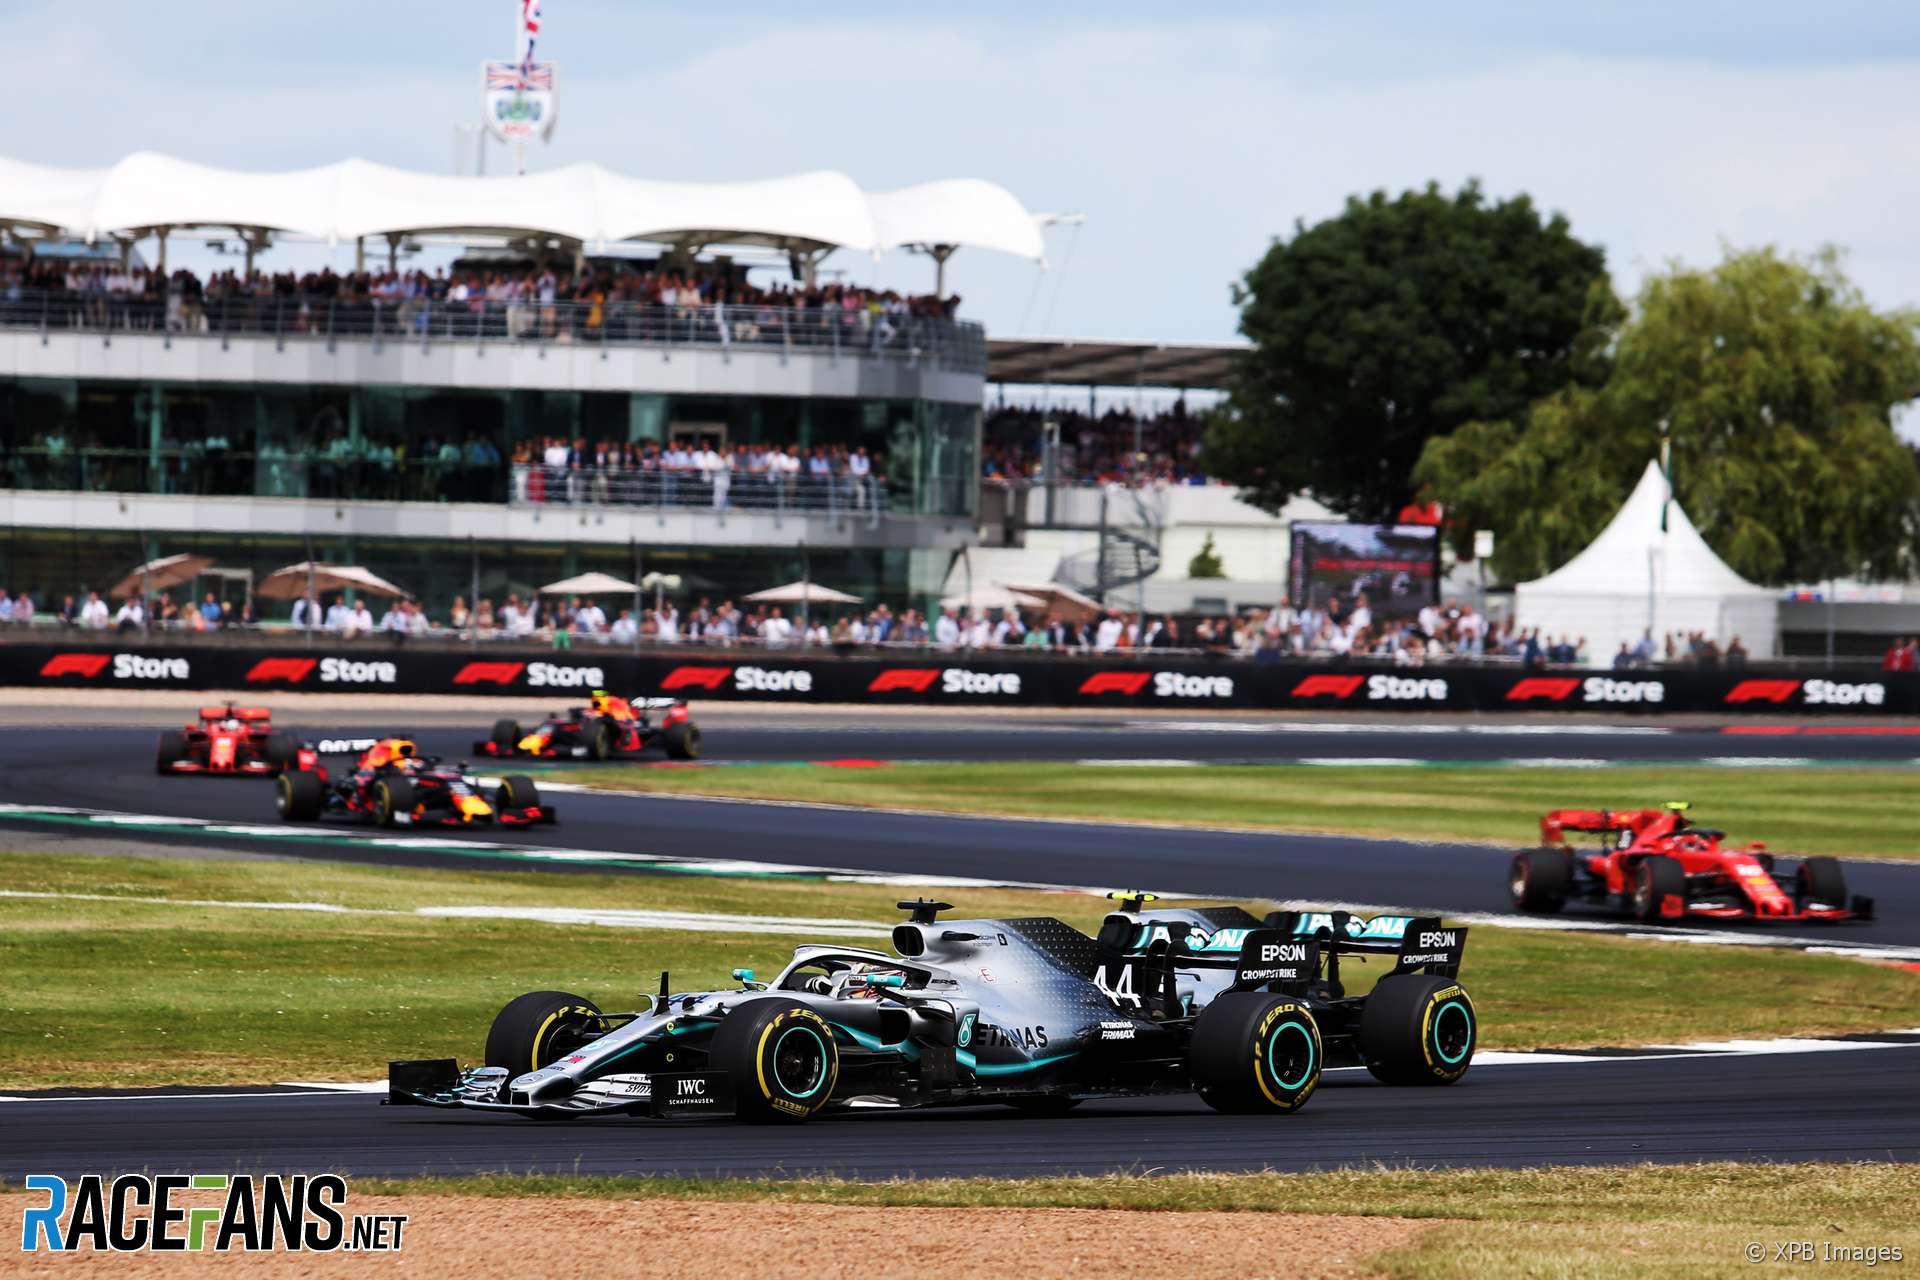 Valtteri Bottas, Lewis Hamilton, Mercedes, Silverstone, 2019